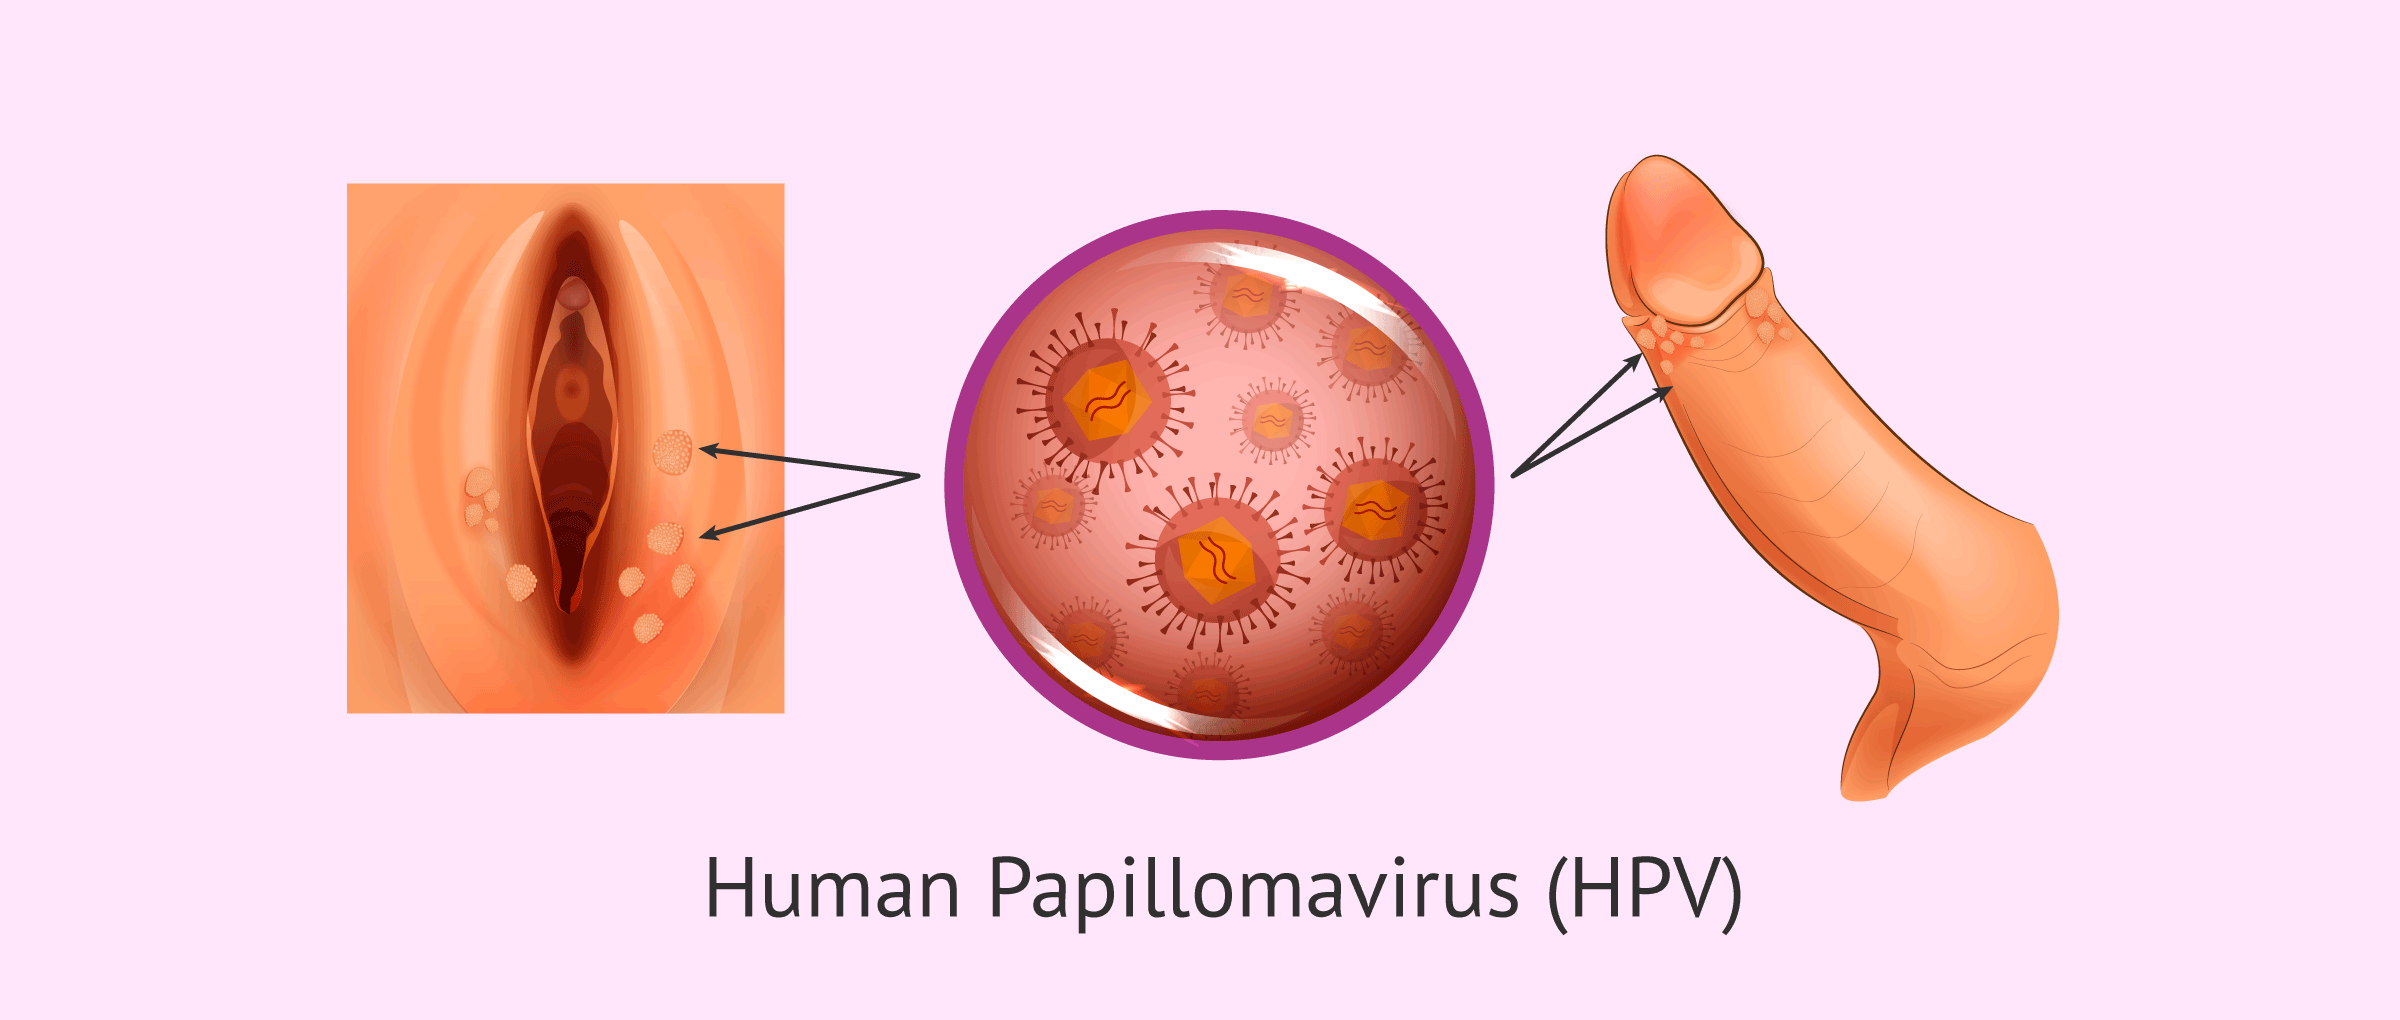 Human papillomavirus infection symptoms in mouth